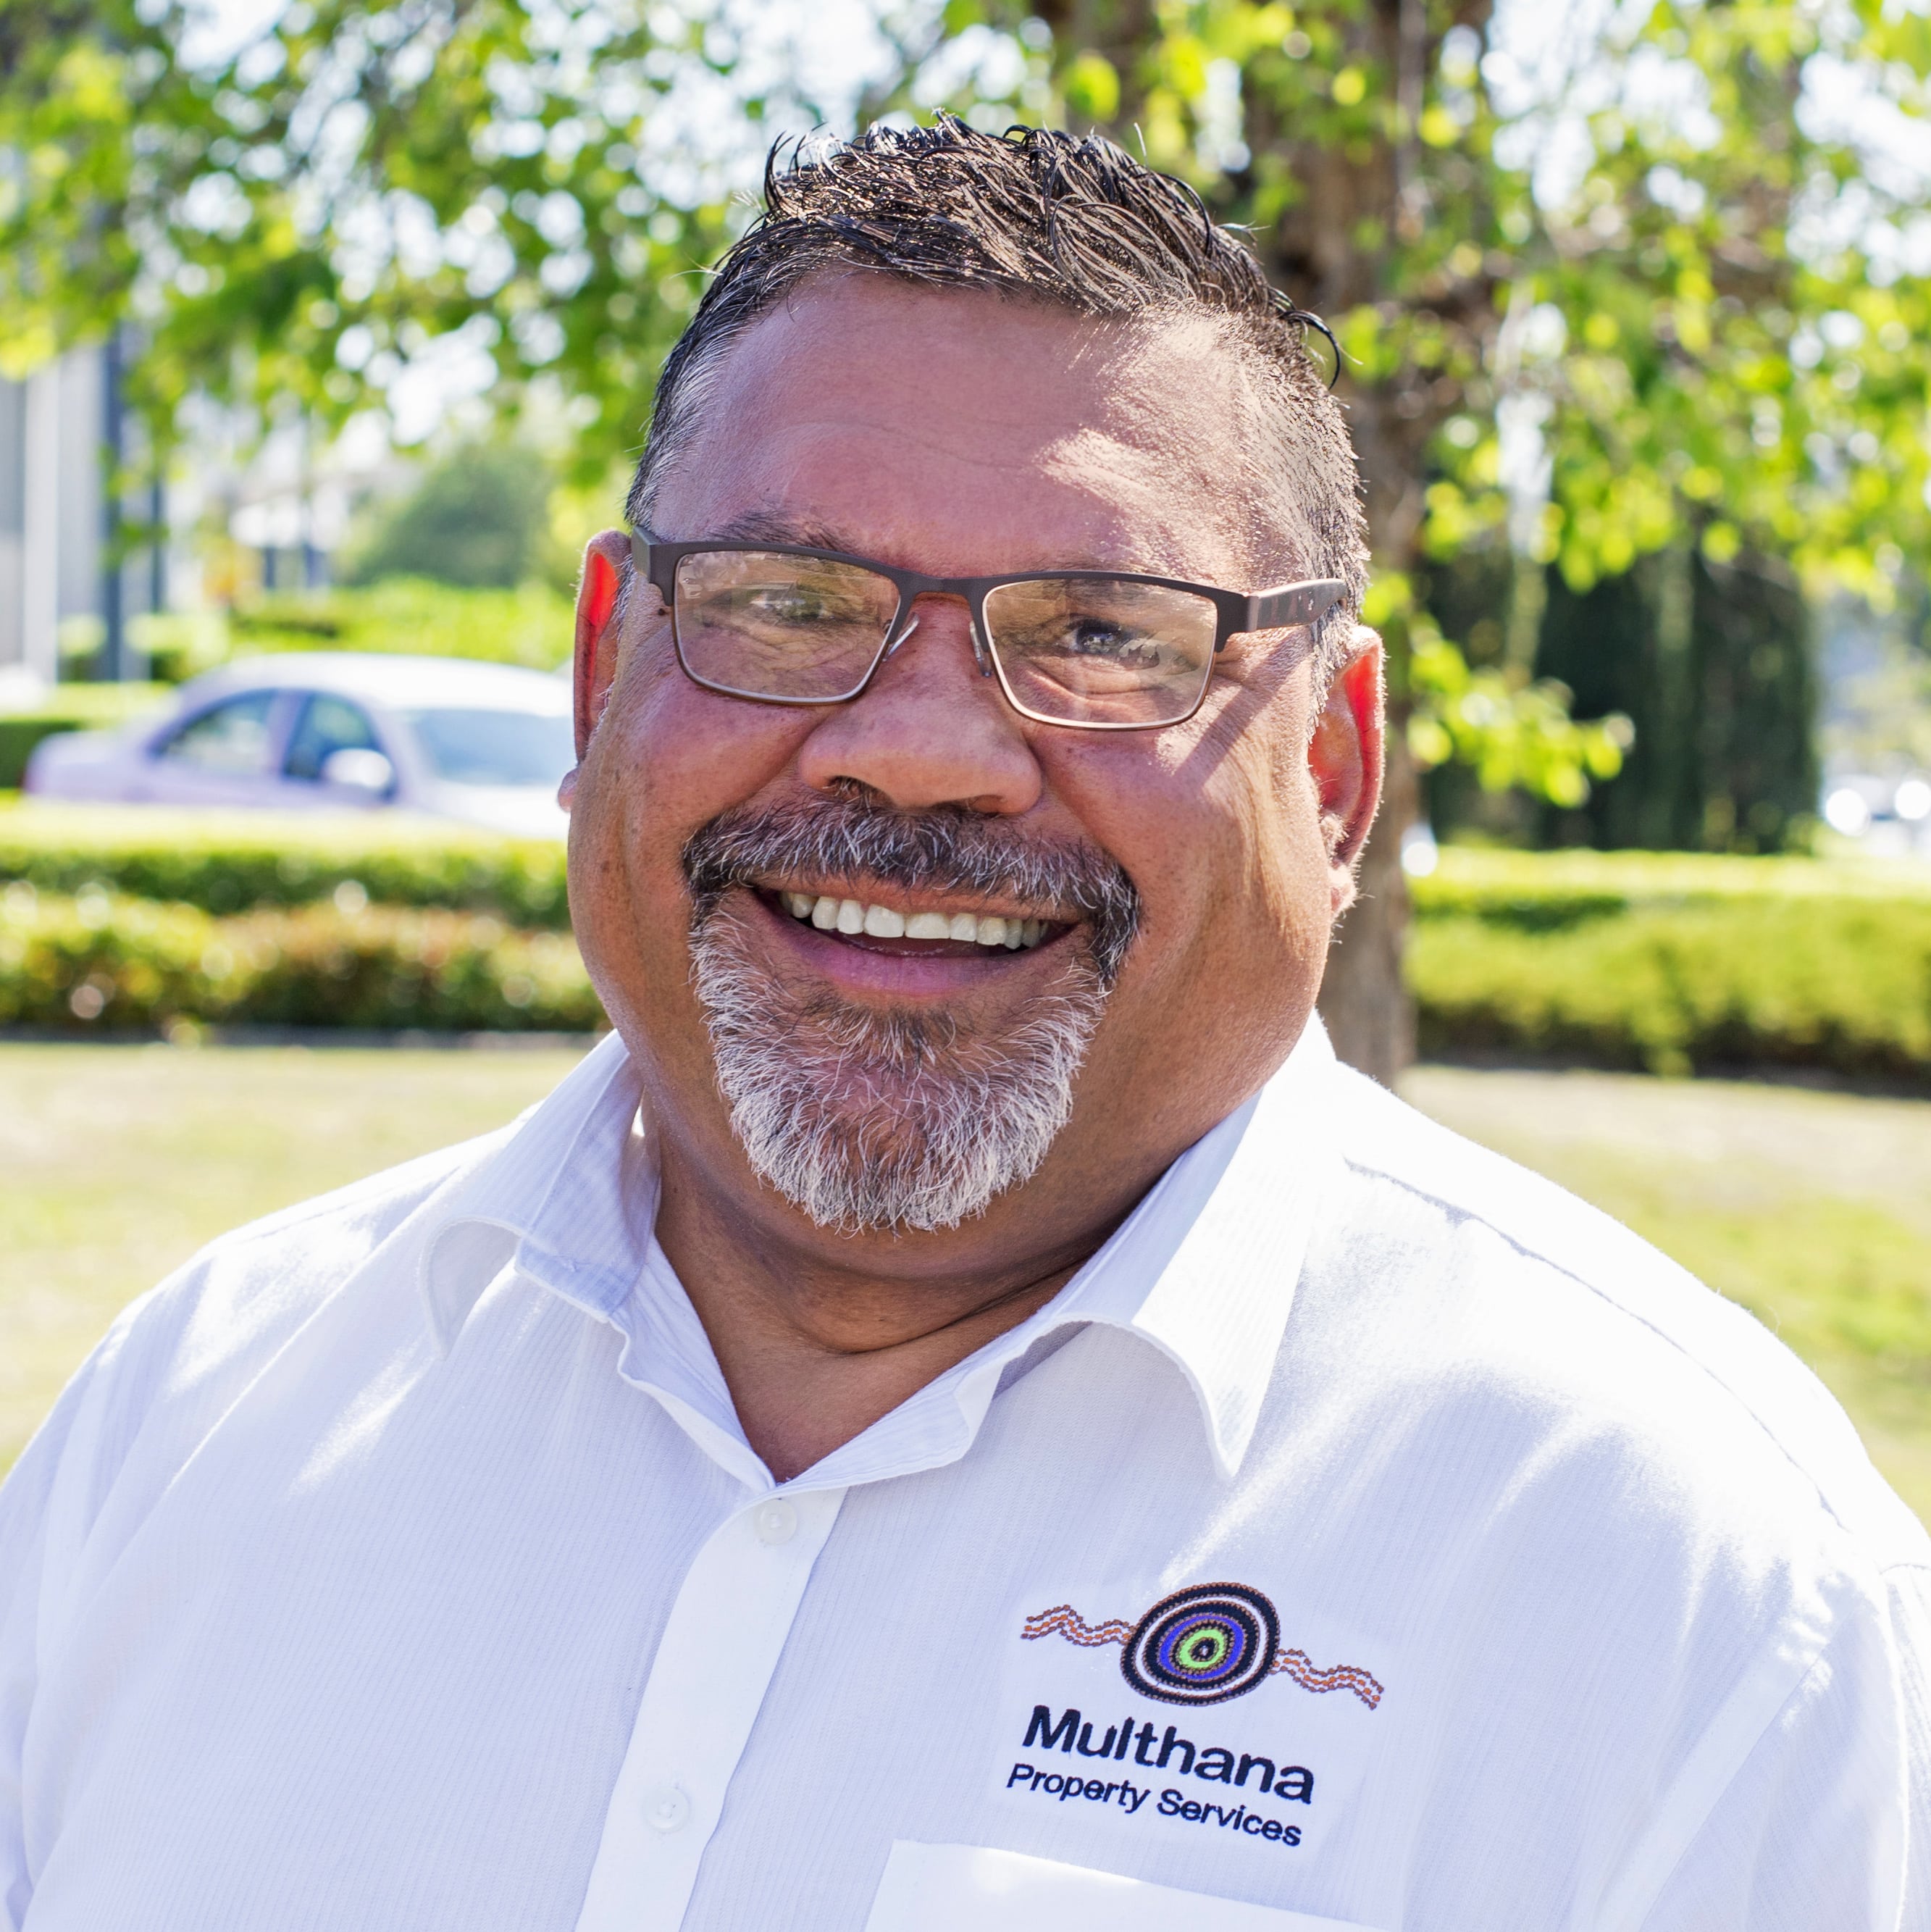 Joseph Wallace | Multhana Property Services Managing Director